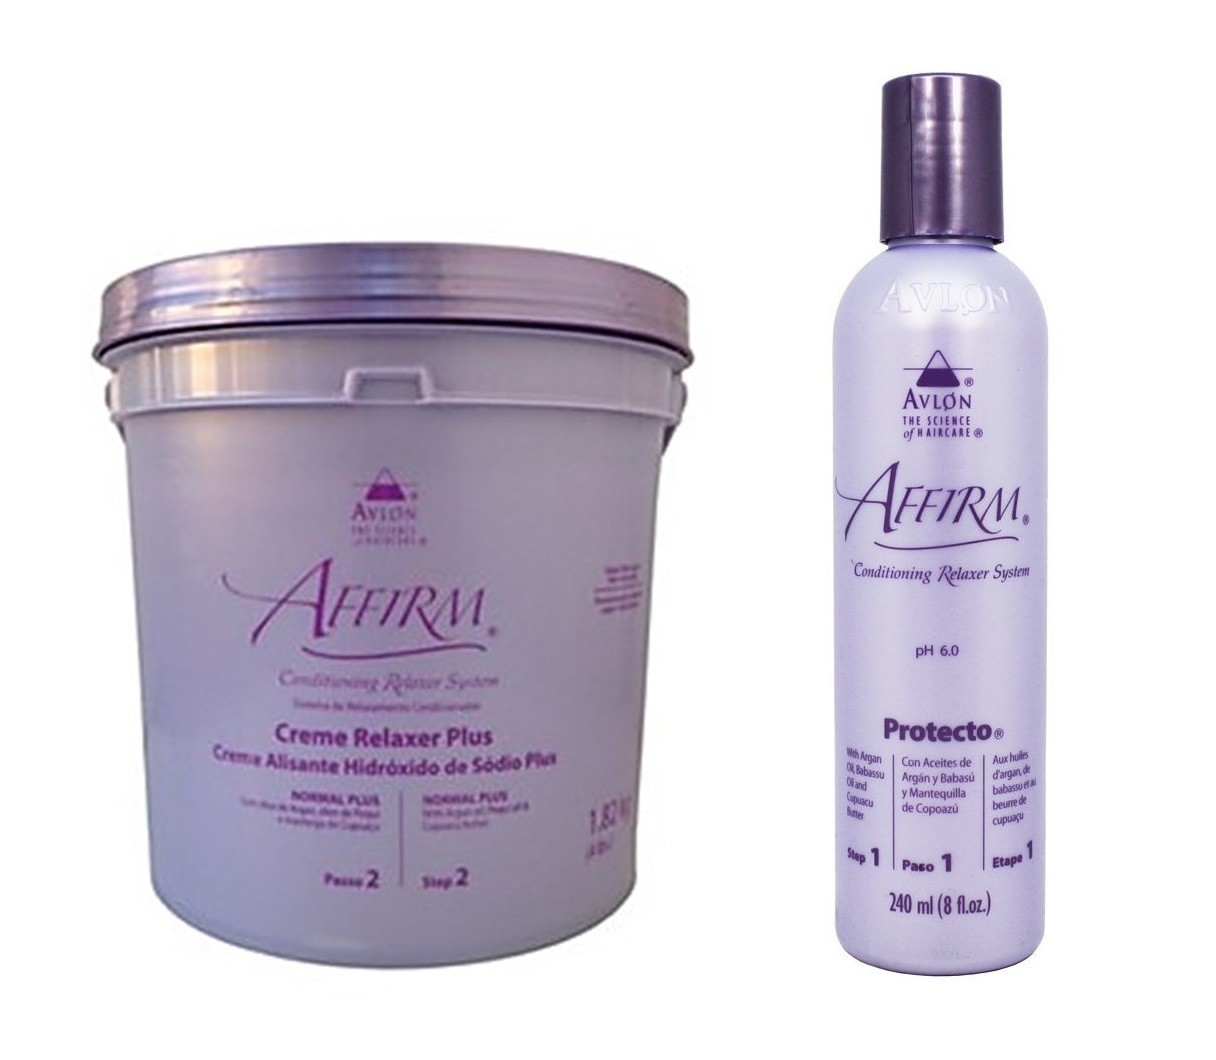 Avlon Affirm Creme Alisante Hidróxido de Sódio Normal Plus 1,8 Kg + Avlon Affirm Protecto Protetor de Fios 120ml